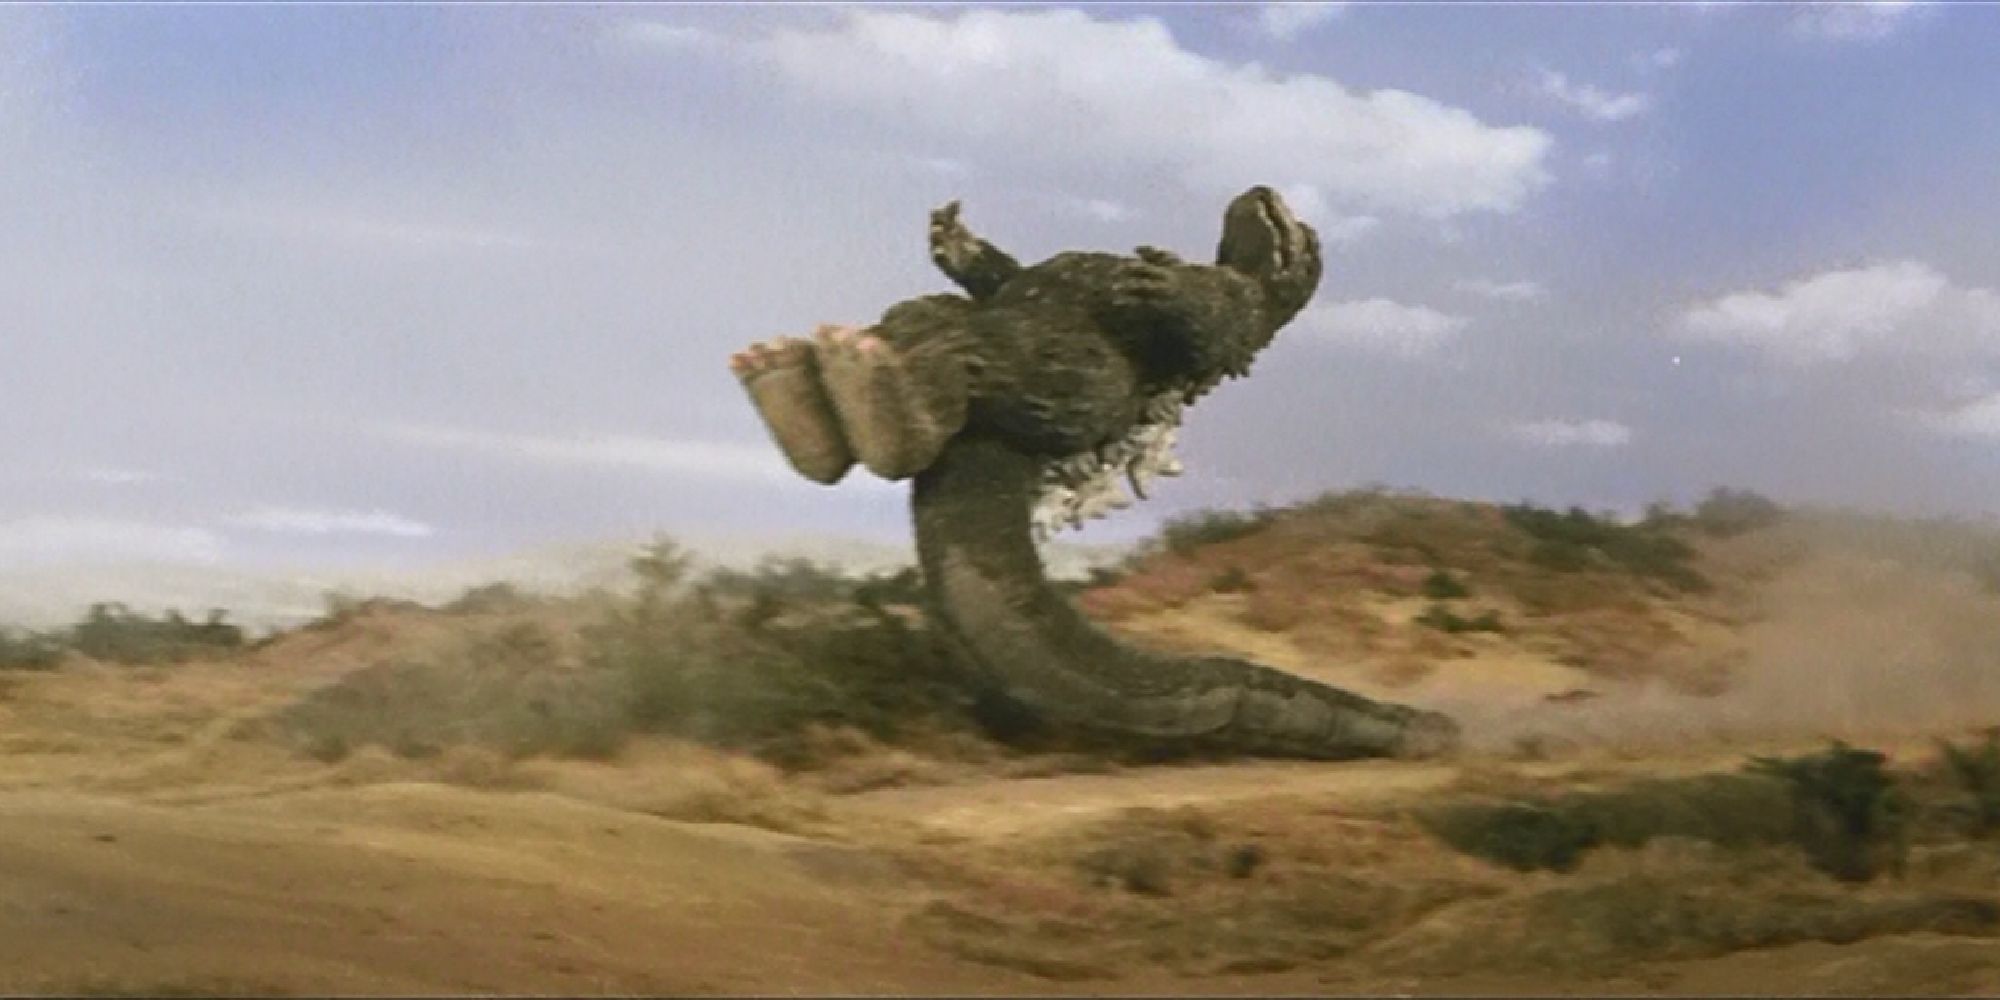 Godzilla vs Megalon - 1973